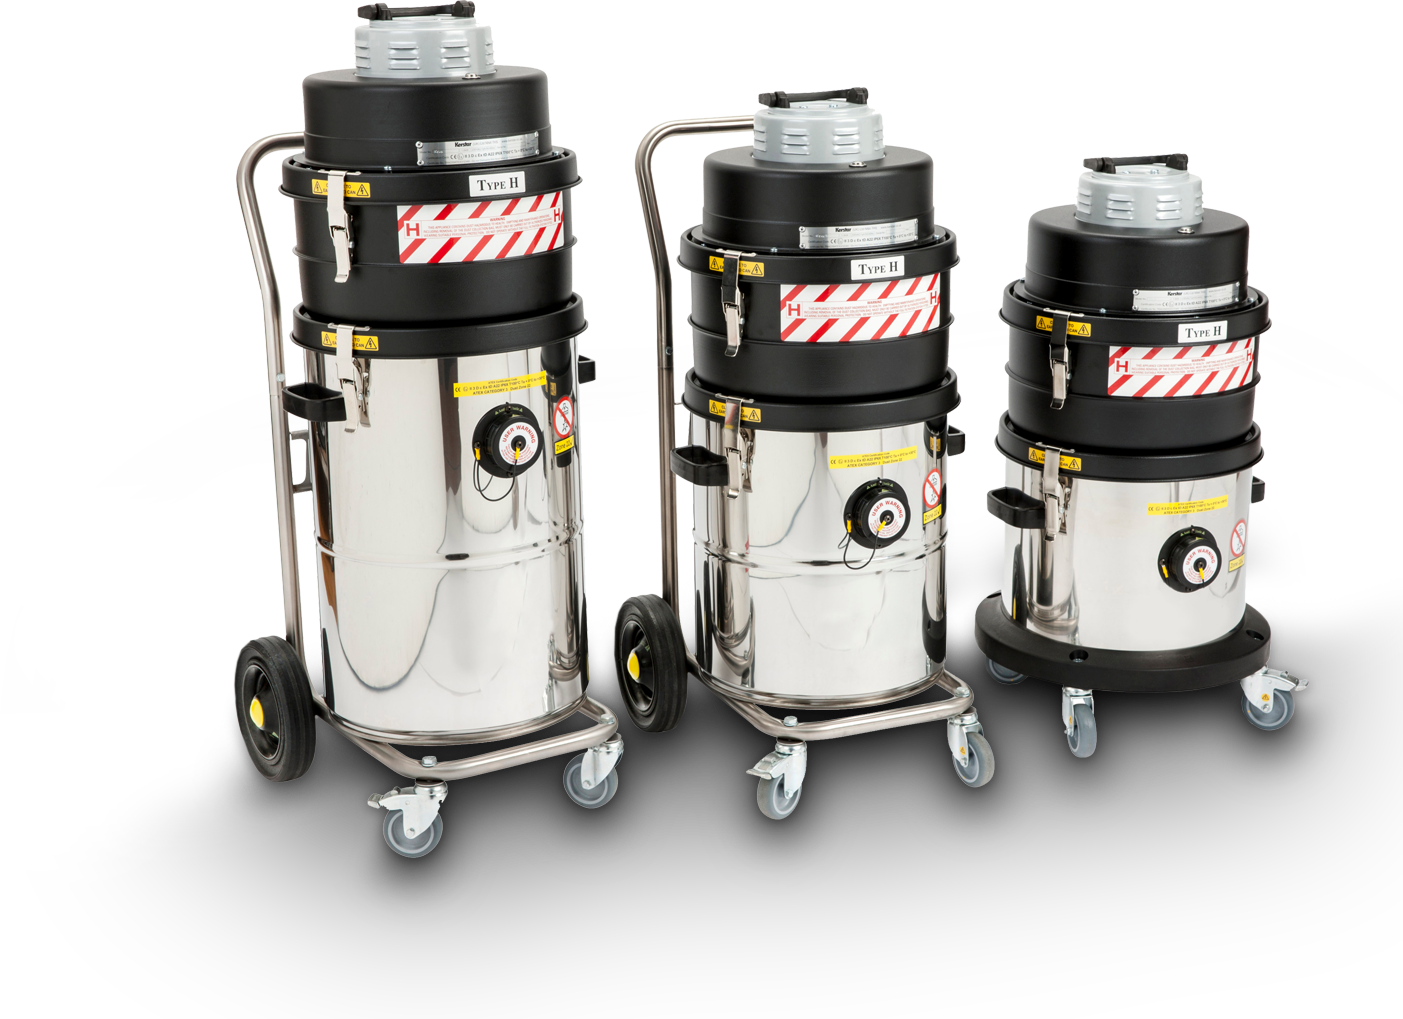 Morclean range of specialist vacuum cleaners